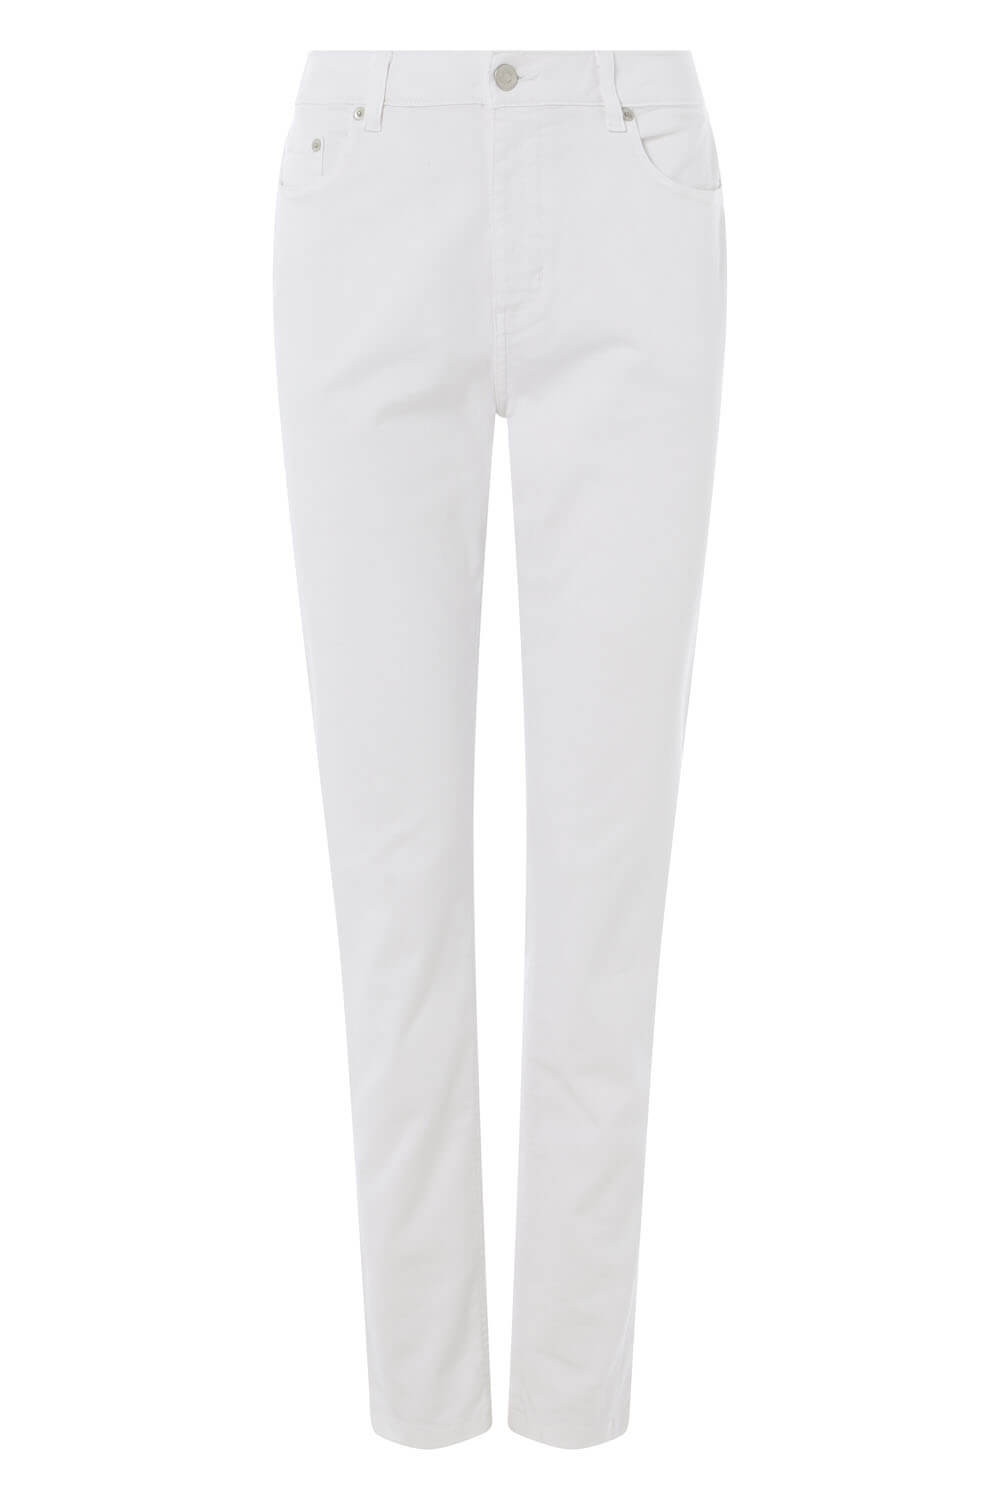 Full Length Tailored Jeans in White - Roman Originals UK